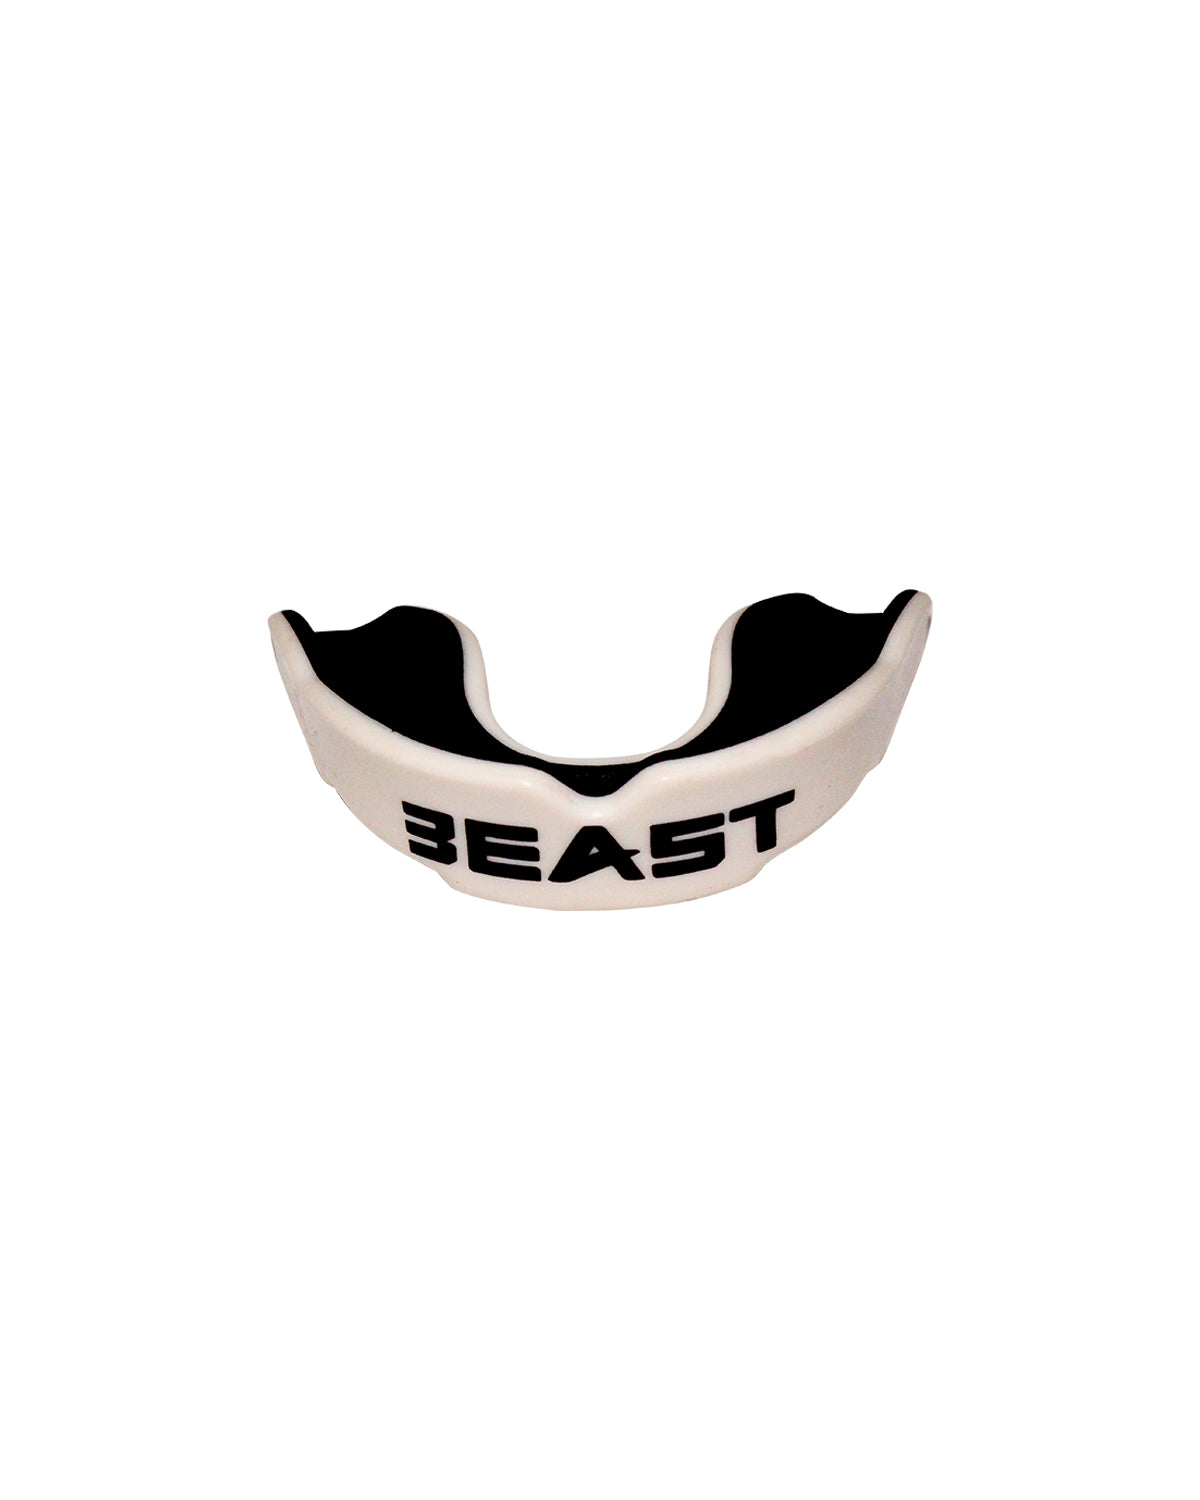 Invincible Beast & Fangs Print Mouth Guard